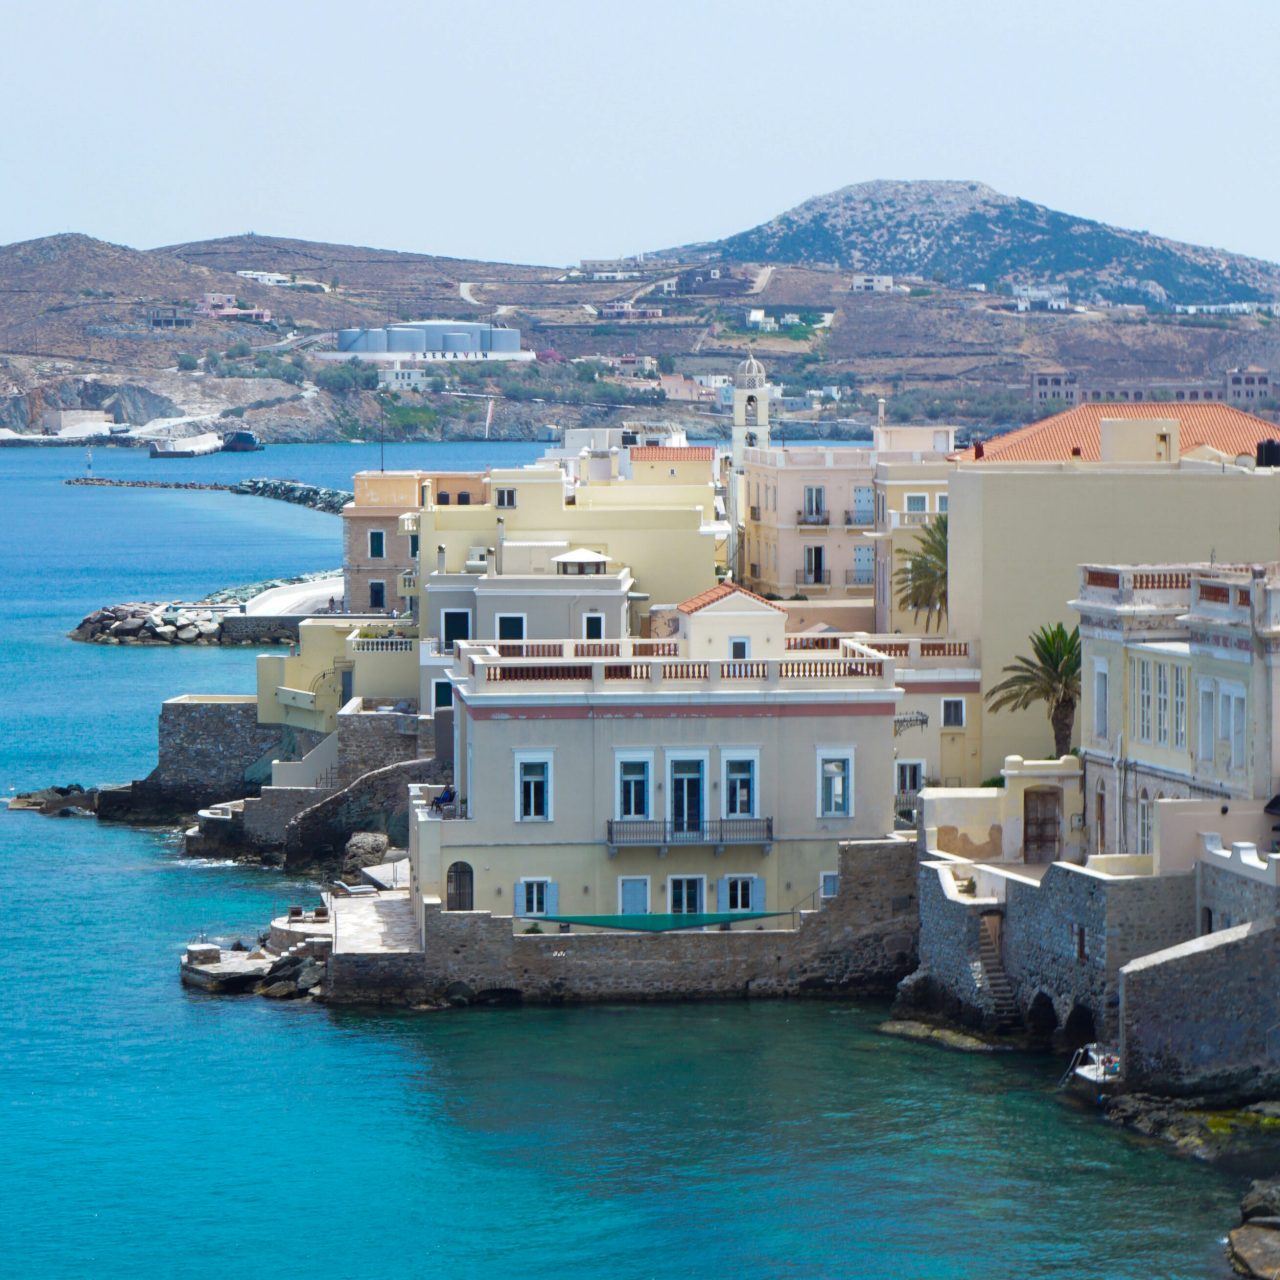 The coastline in Syros